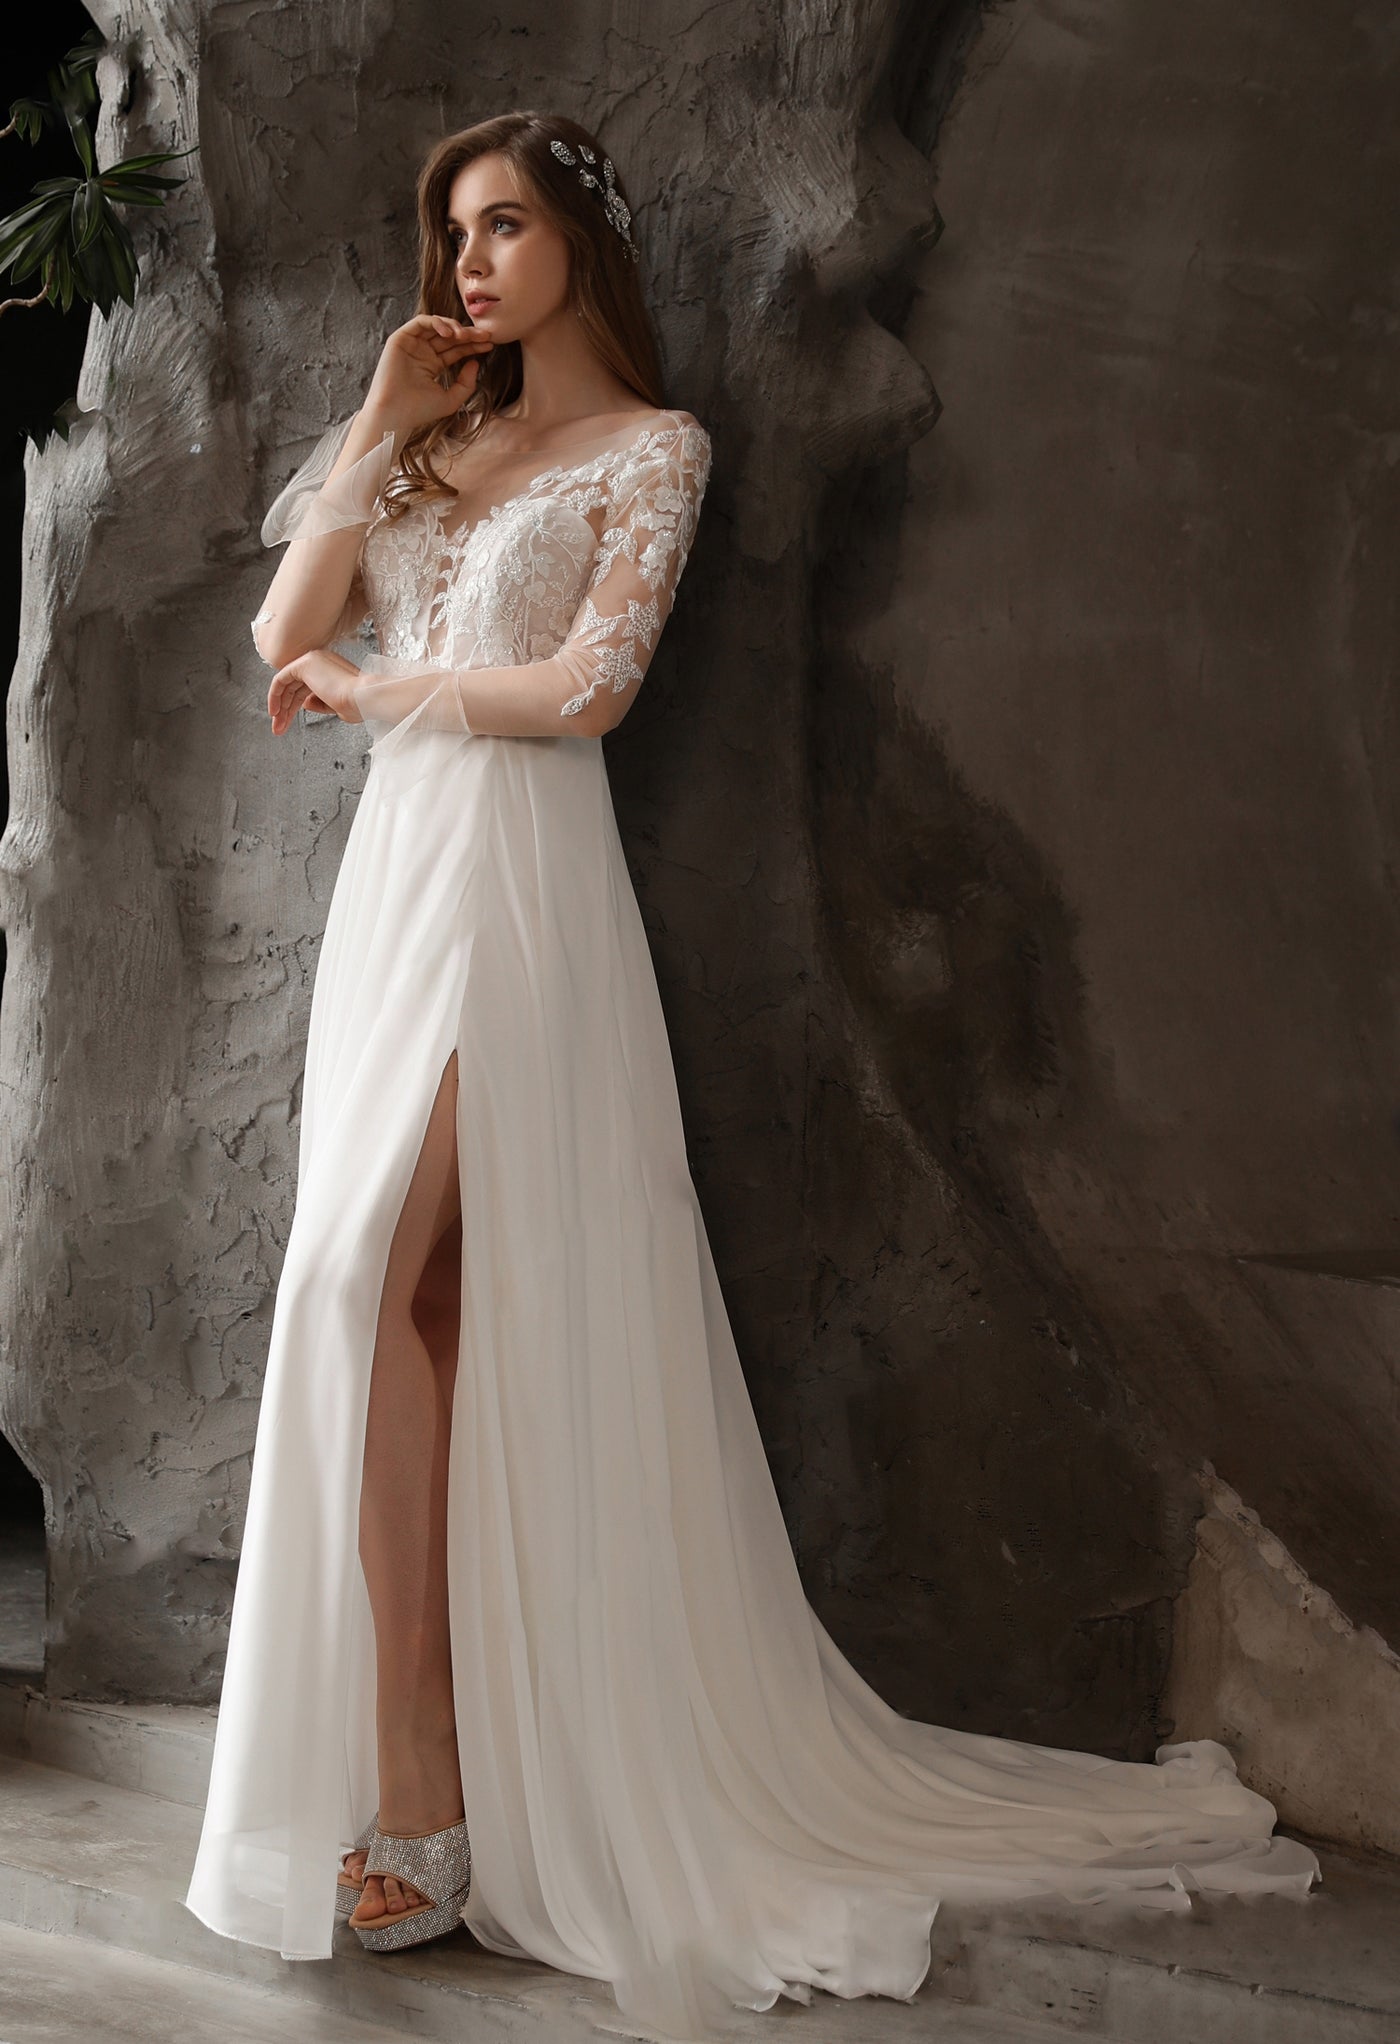 Chiffon Illusion Lace Bridal Dress with Dreamy A-line Skirt